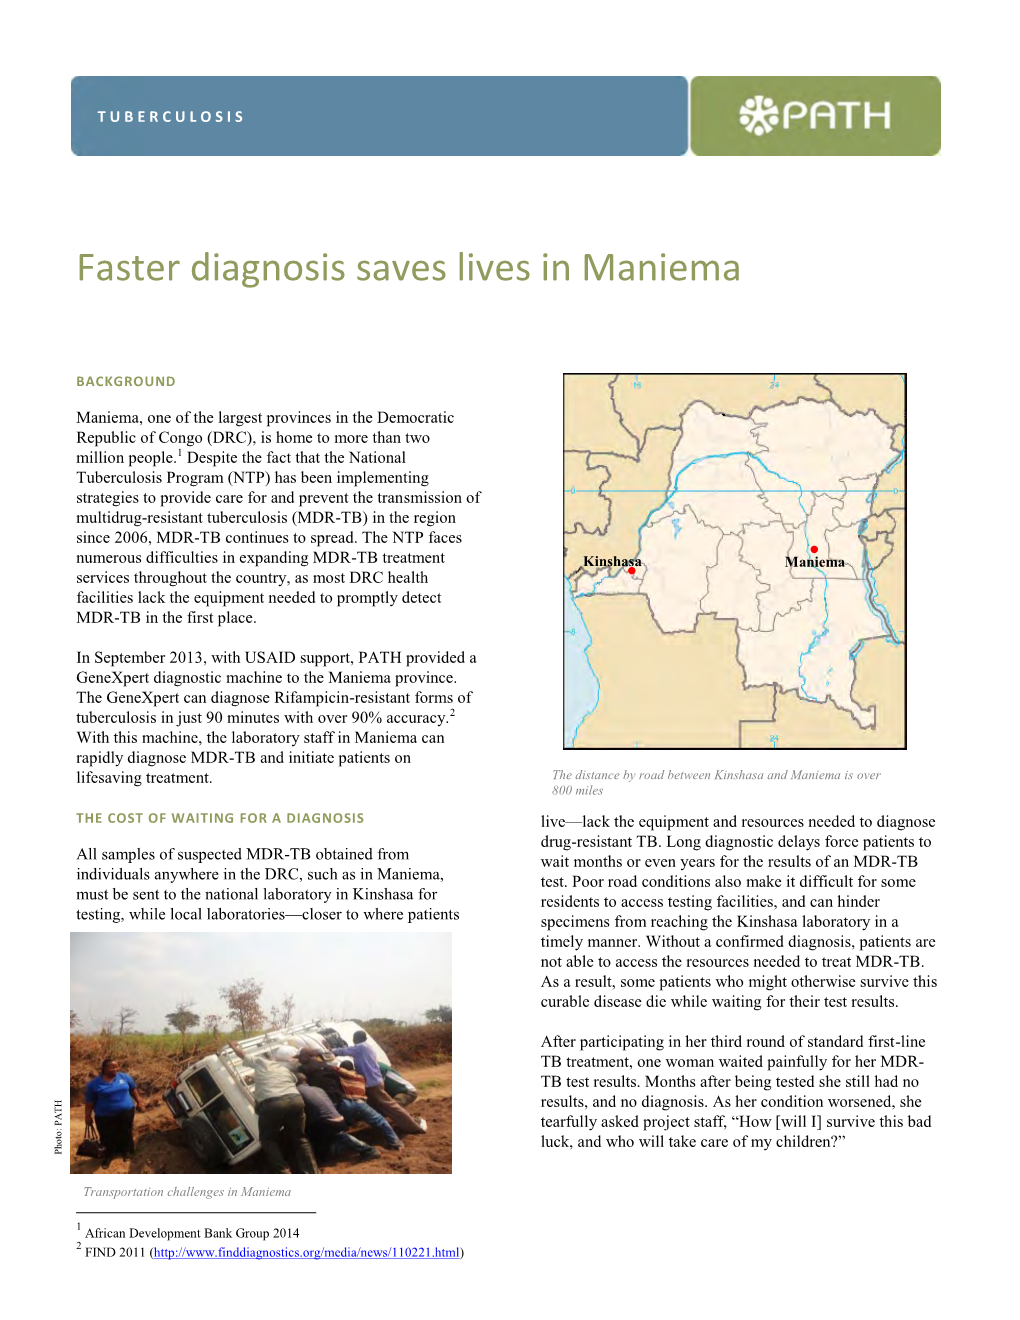 Faster Diagnosis Saves Lives in Maniema